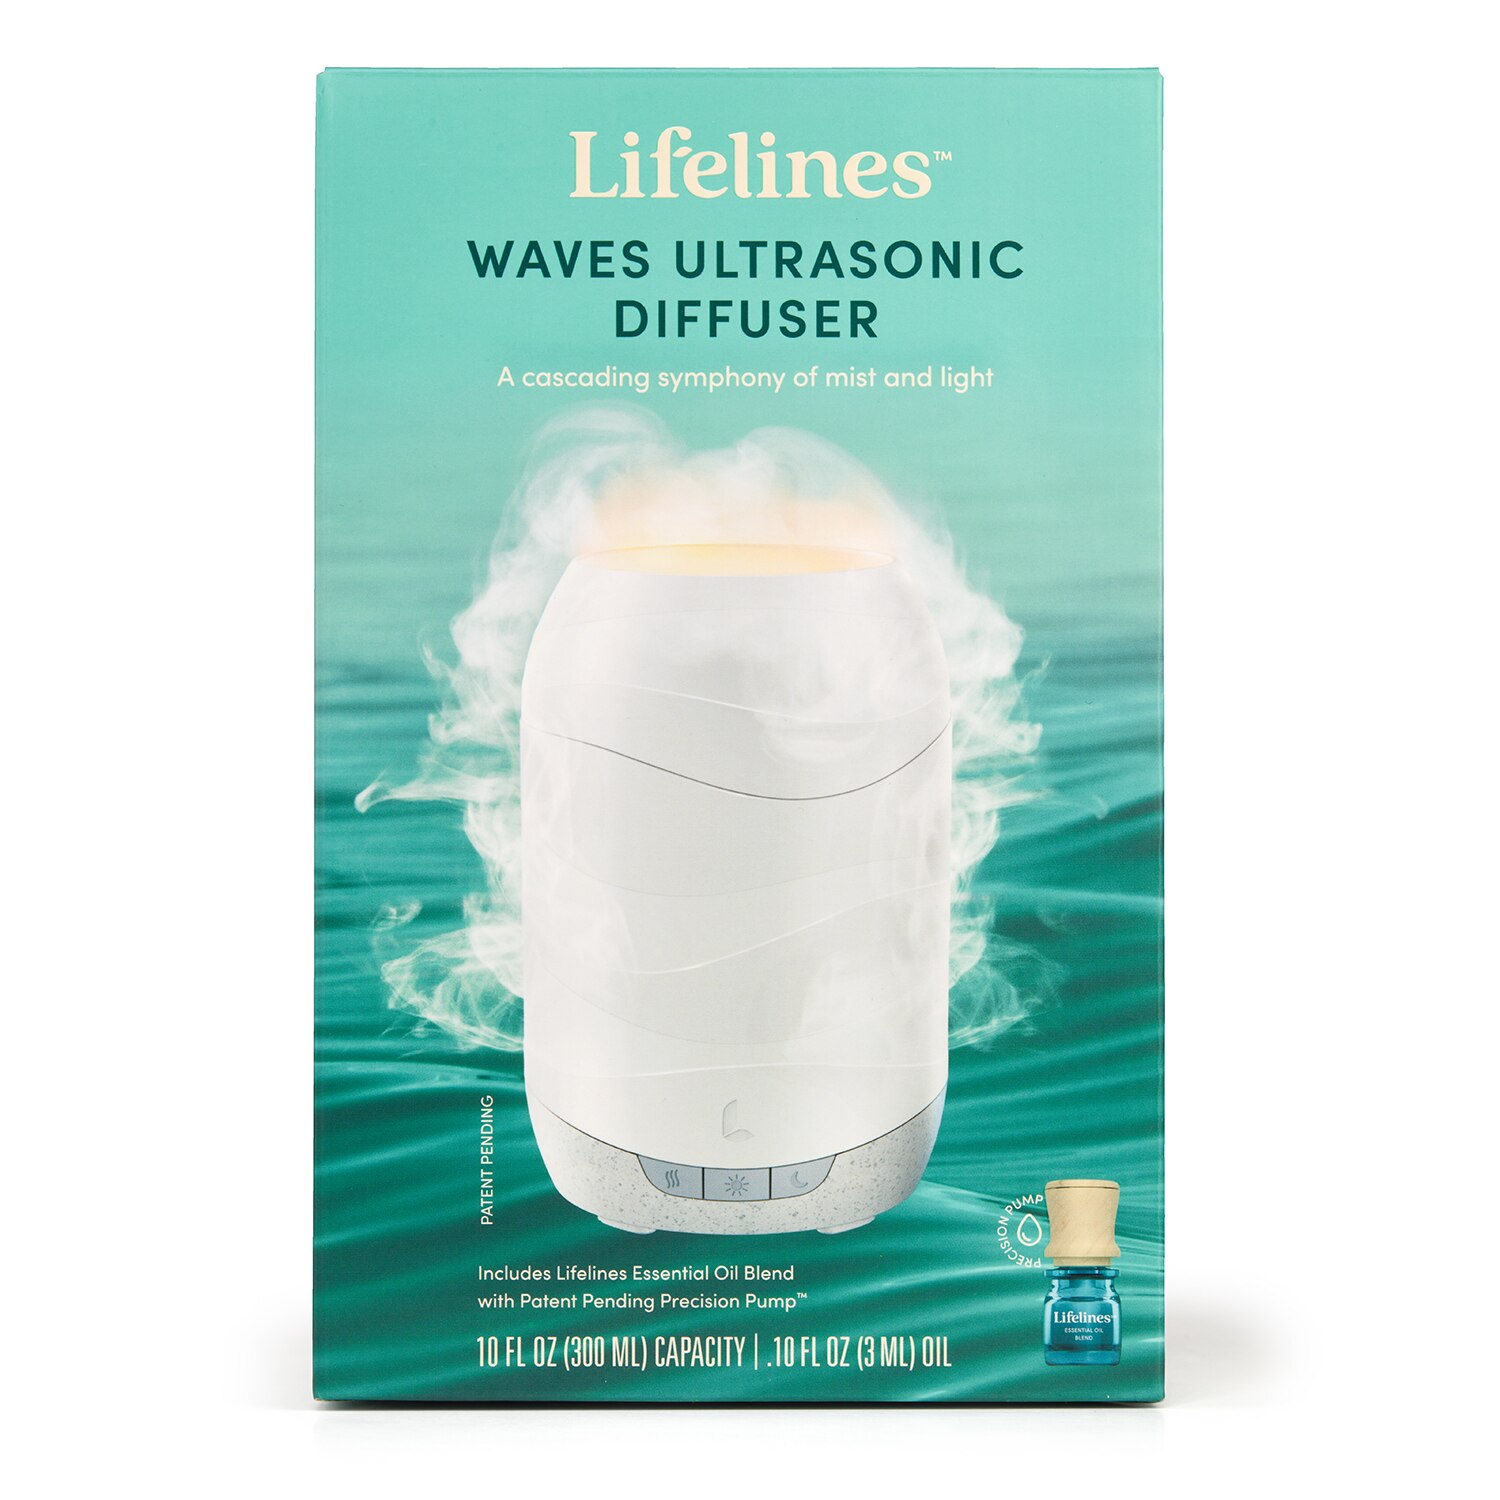 Lifelines Waves Ultrasonic Diffuser (200ml) - Cascading Mist And Light Plus Essential Oil Blend , CVS